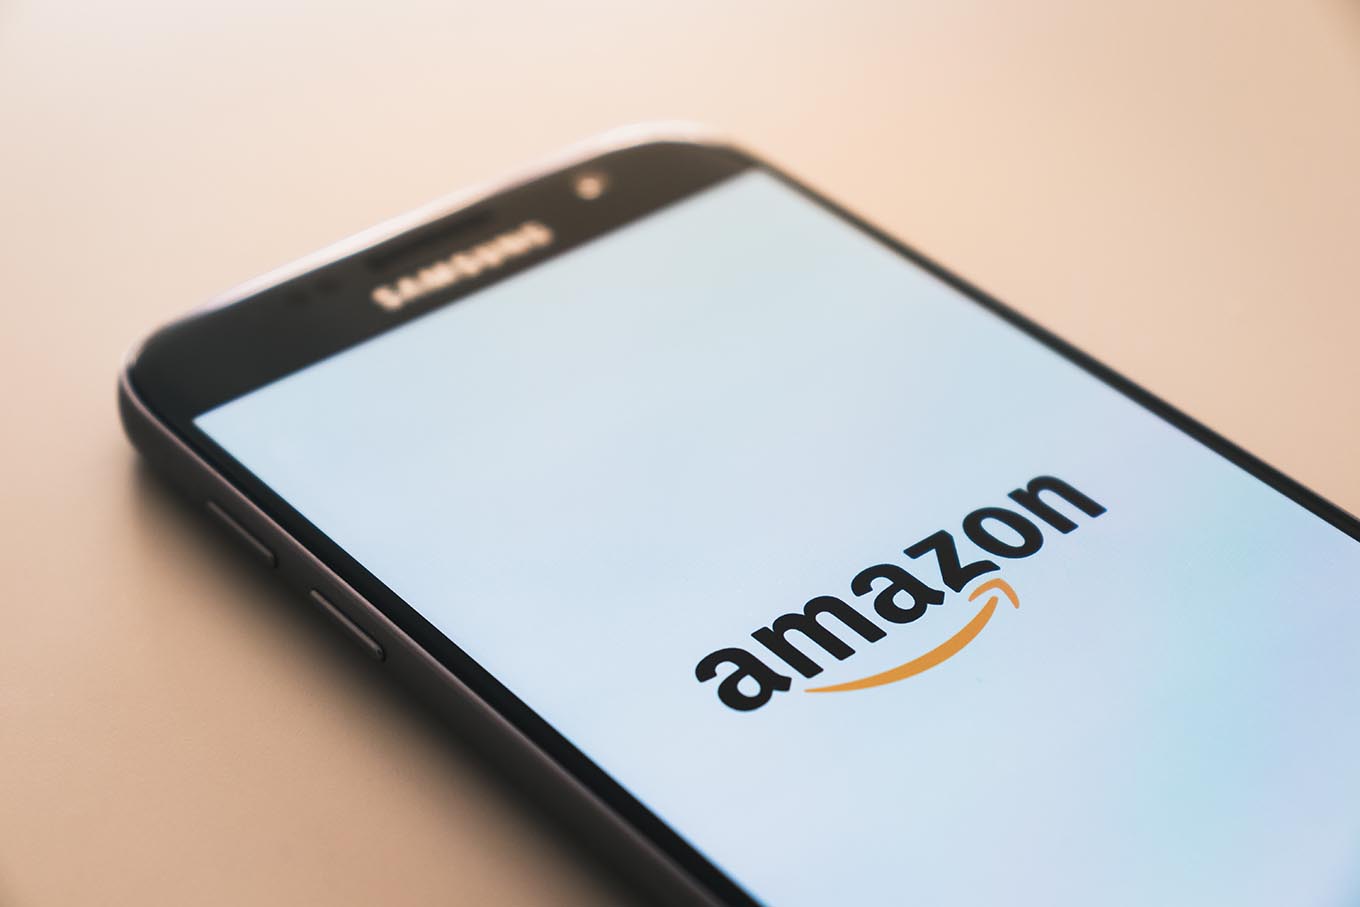 Earn passive income with Amazon